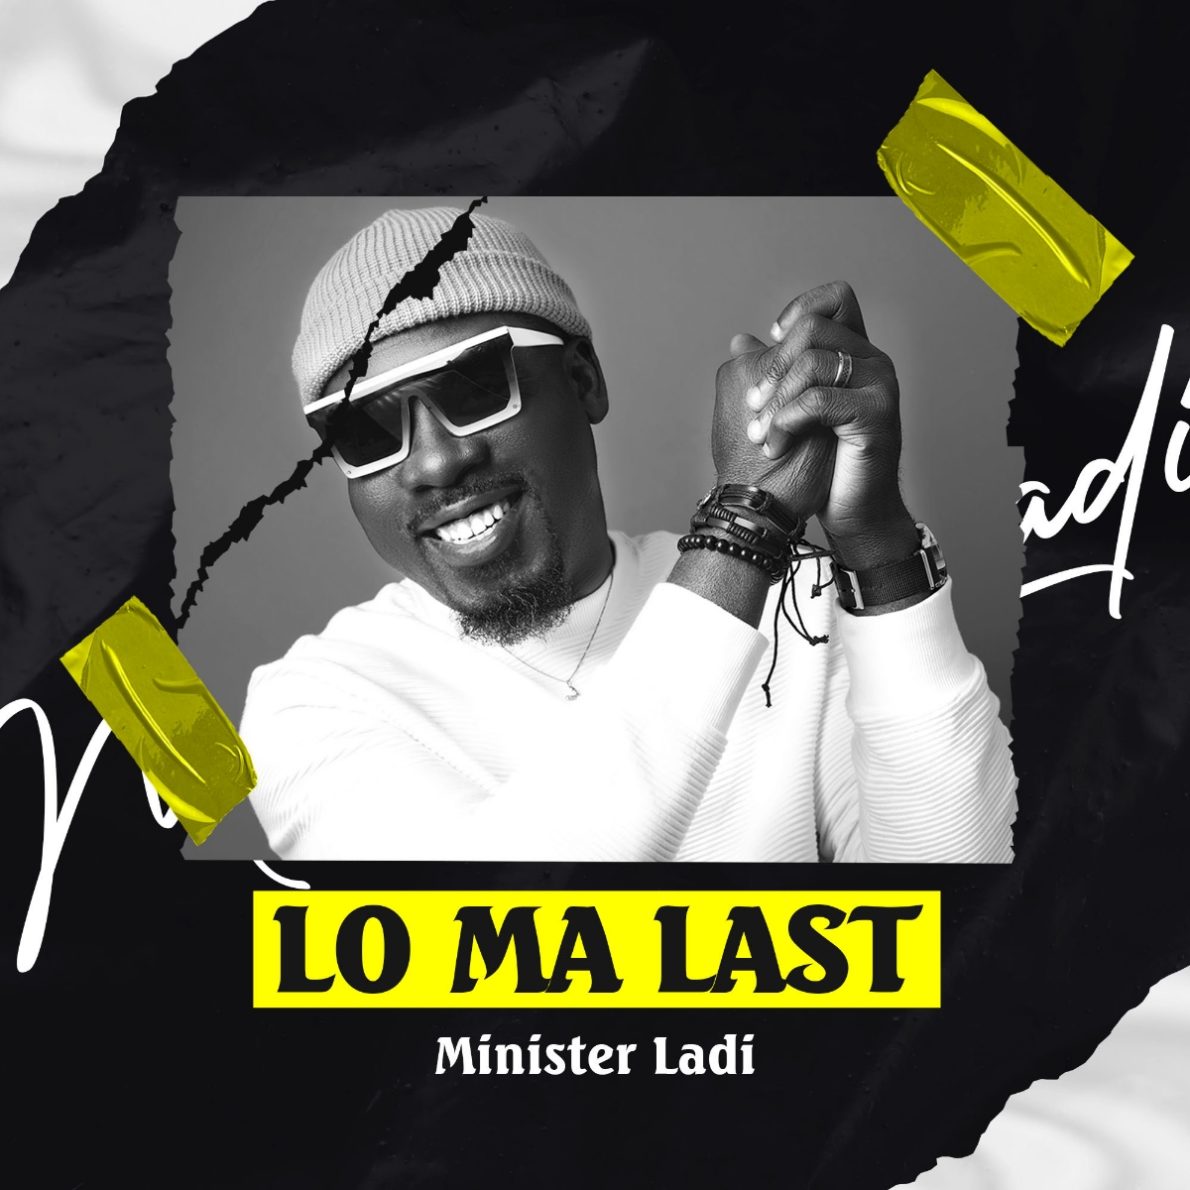 Minister-Ladi-Lo-Ma-Last-